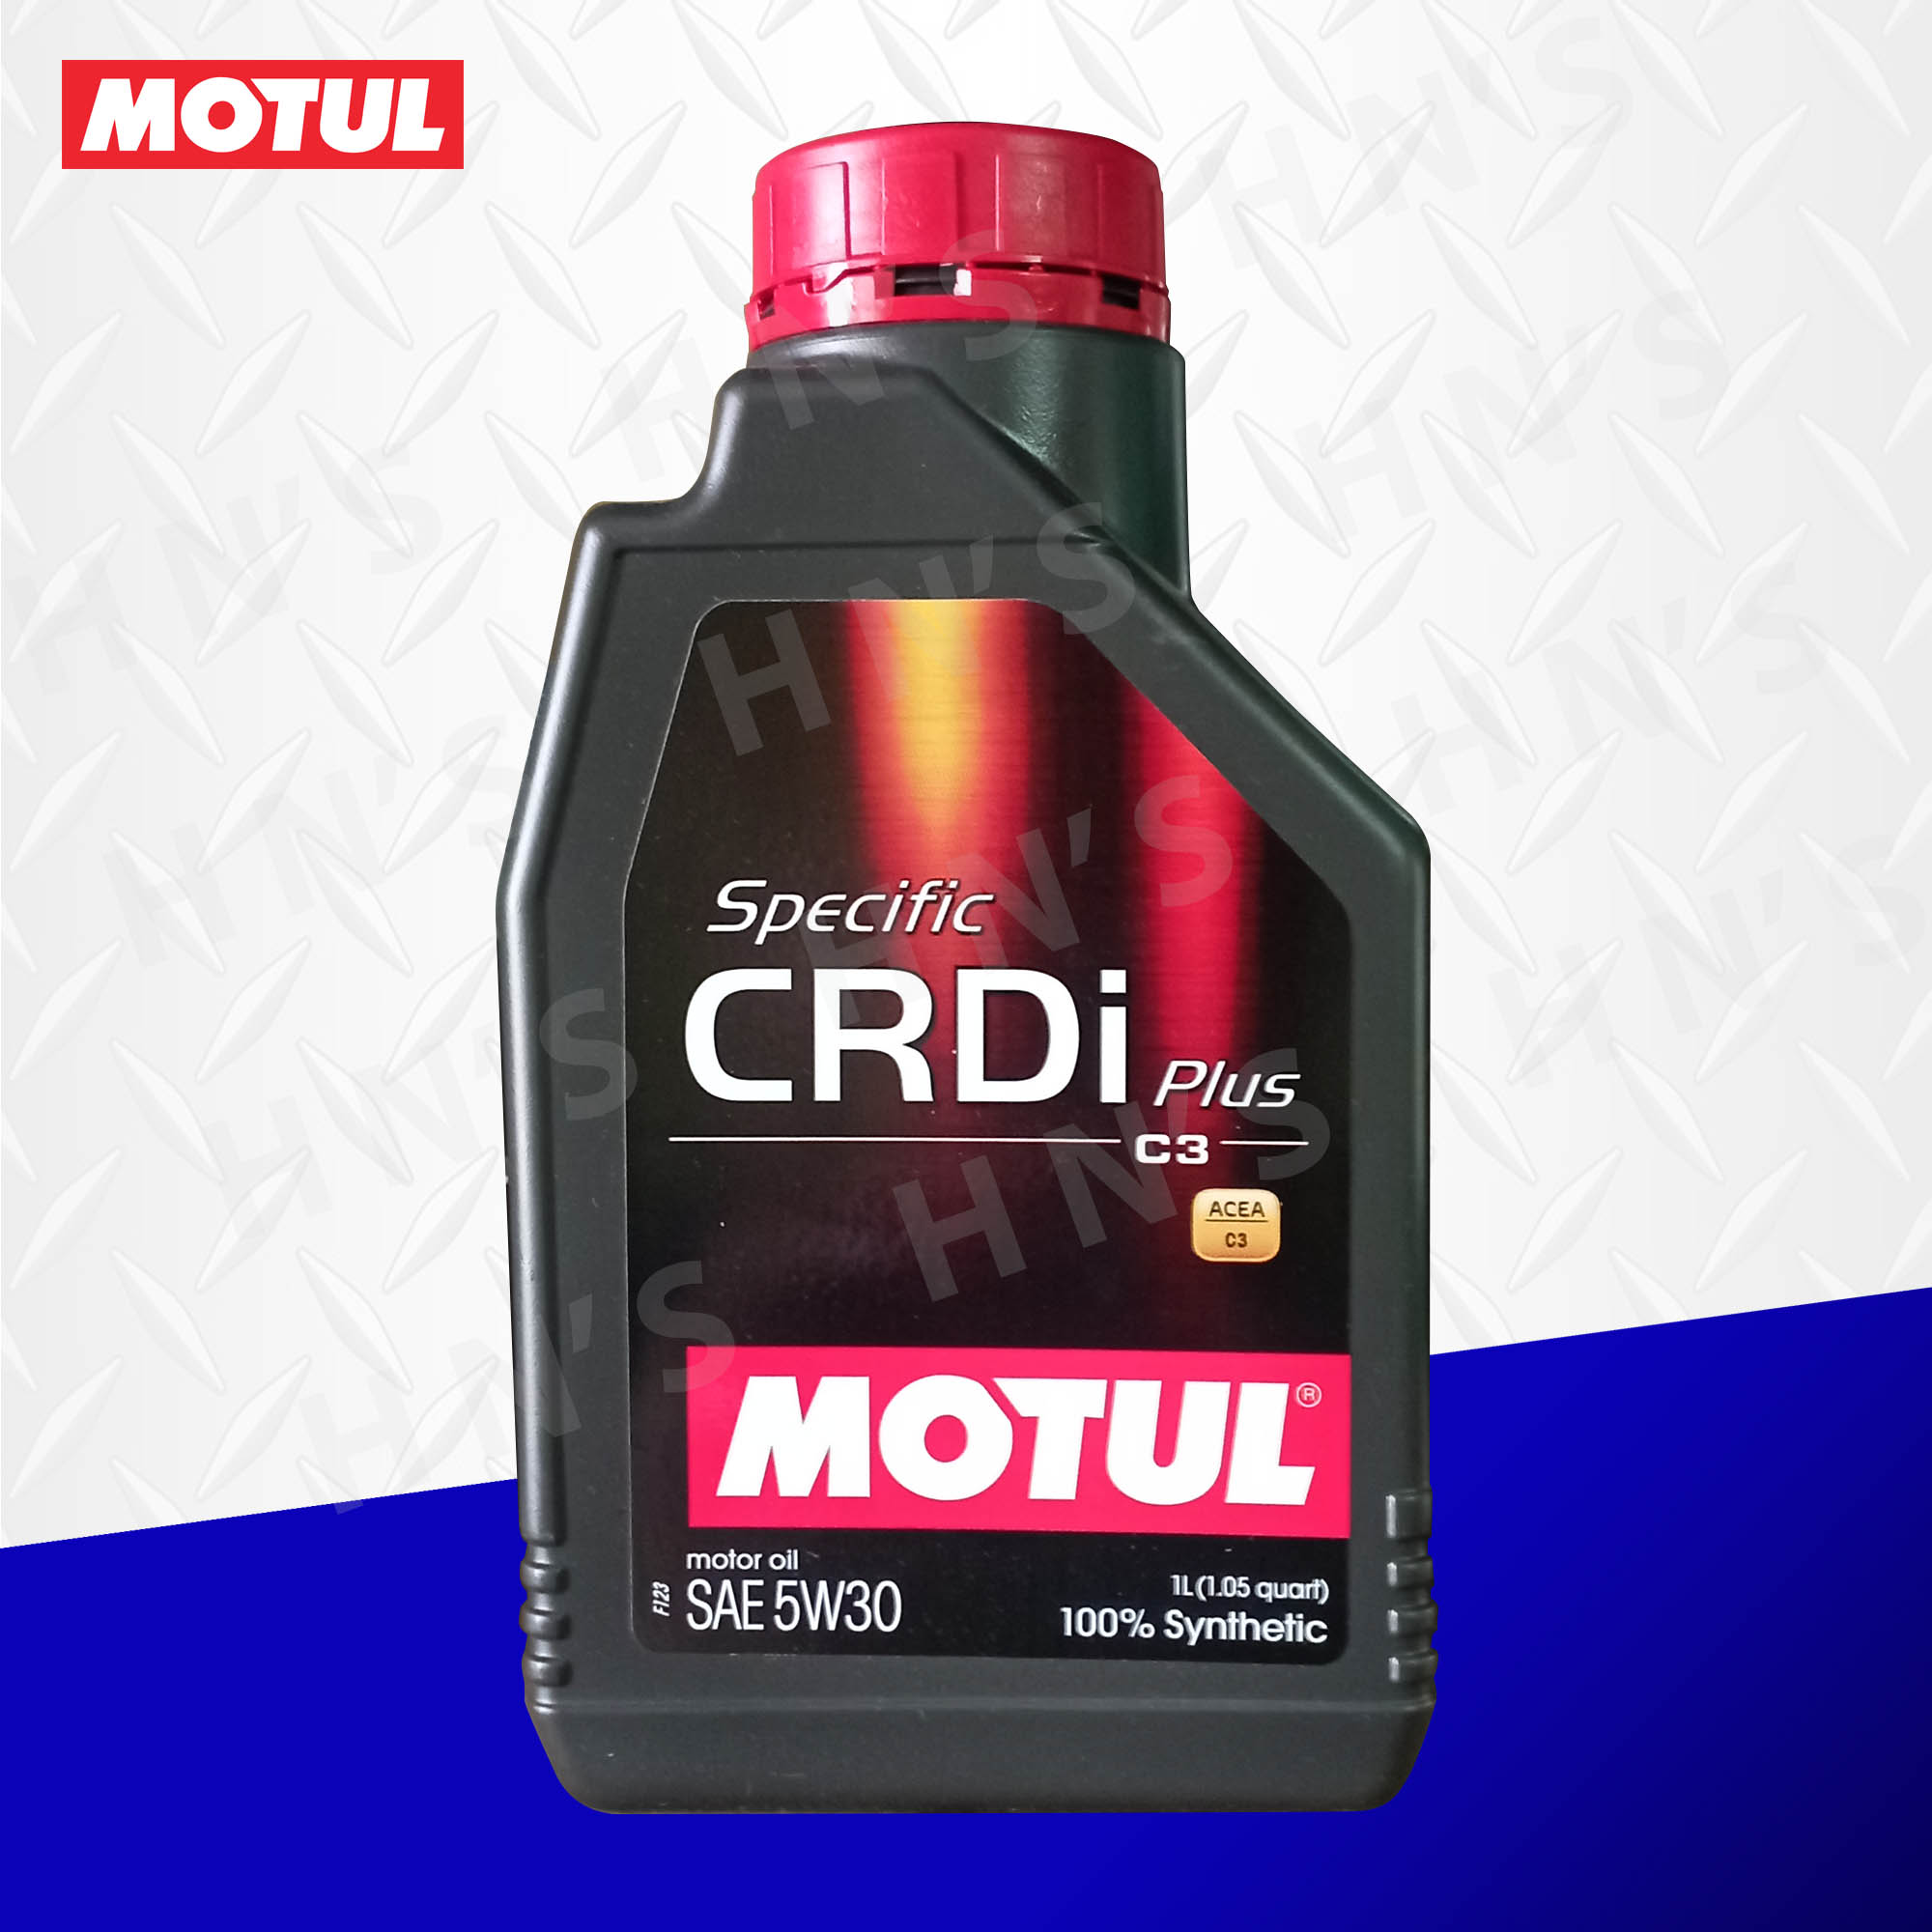 Motul Specific CRDI+ 5W-30 Fully Synthetic Motor Oil 1L ACEA C3